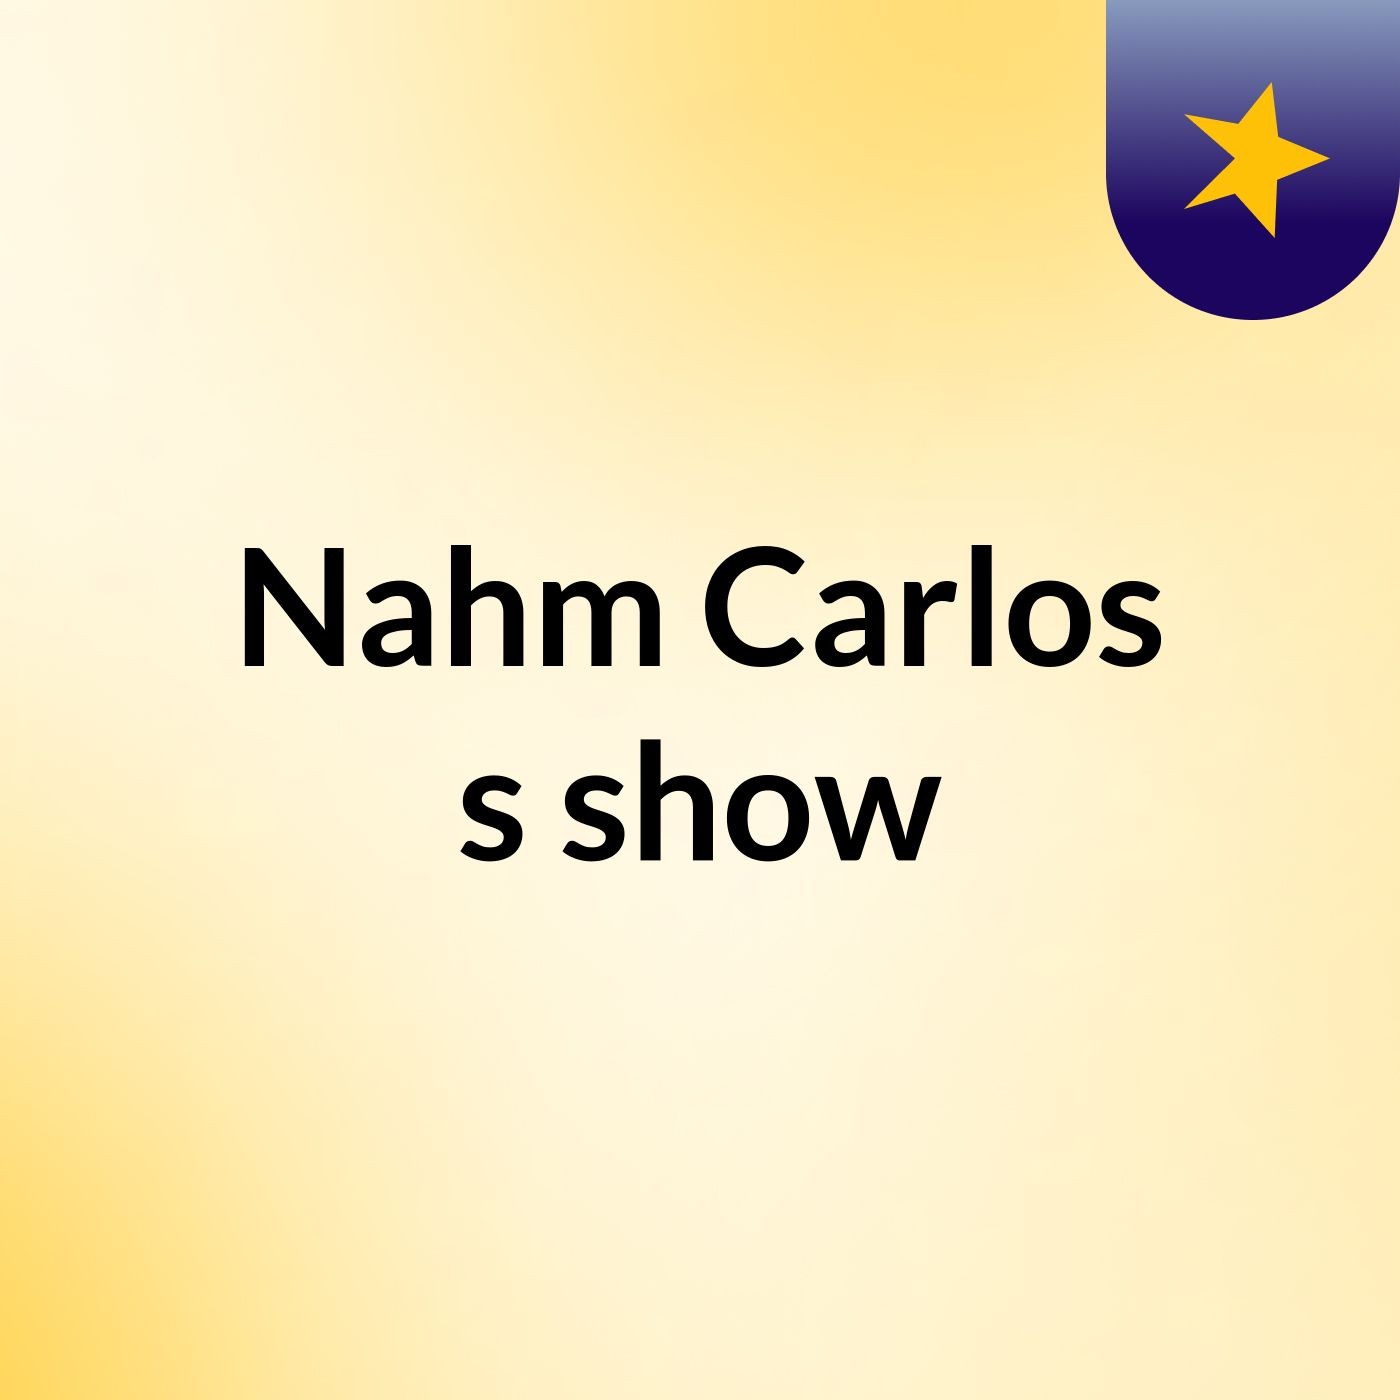 Nahm Carlos's show